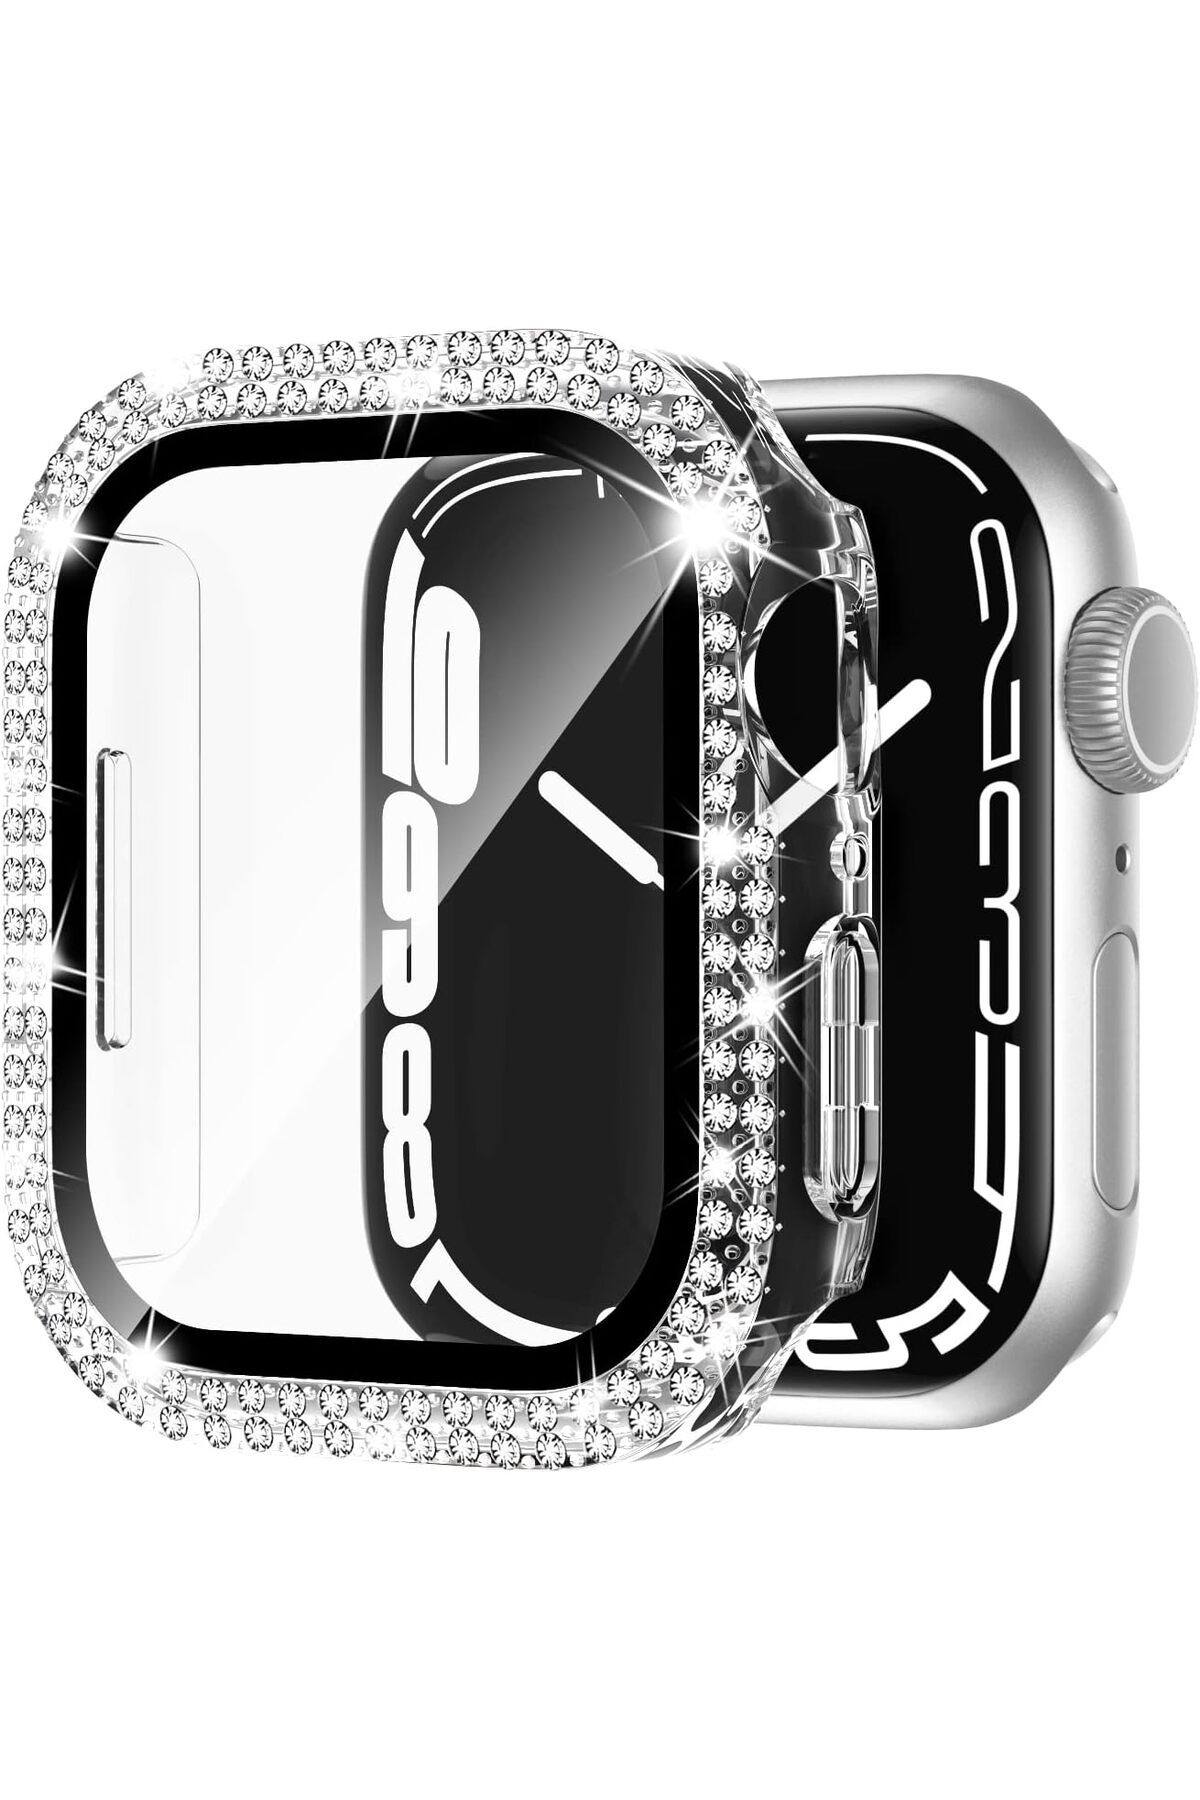 mimtec Apple Watch 1 2 3 4 5 6 7 8 Se Serisi Uyumlu 40 mm Taşlı 360 Tam Koruma Şeffaf Silikon Kılıf